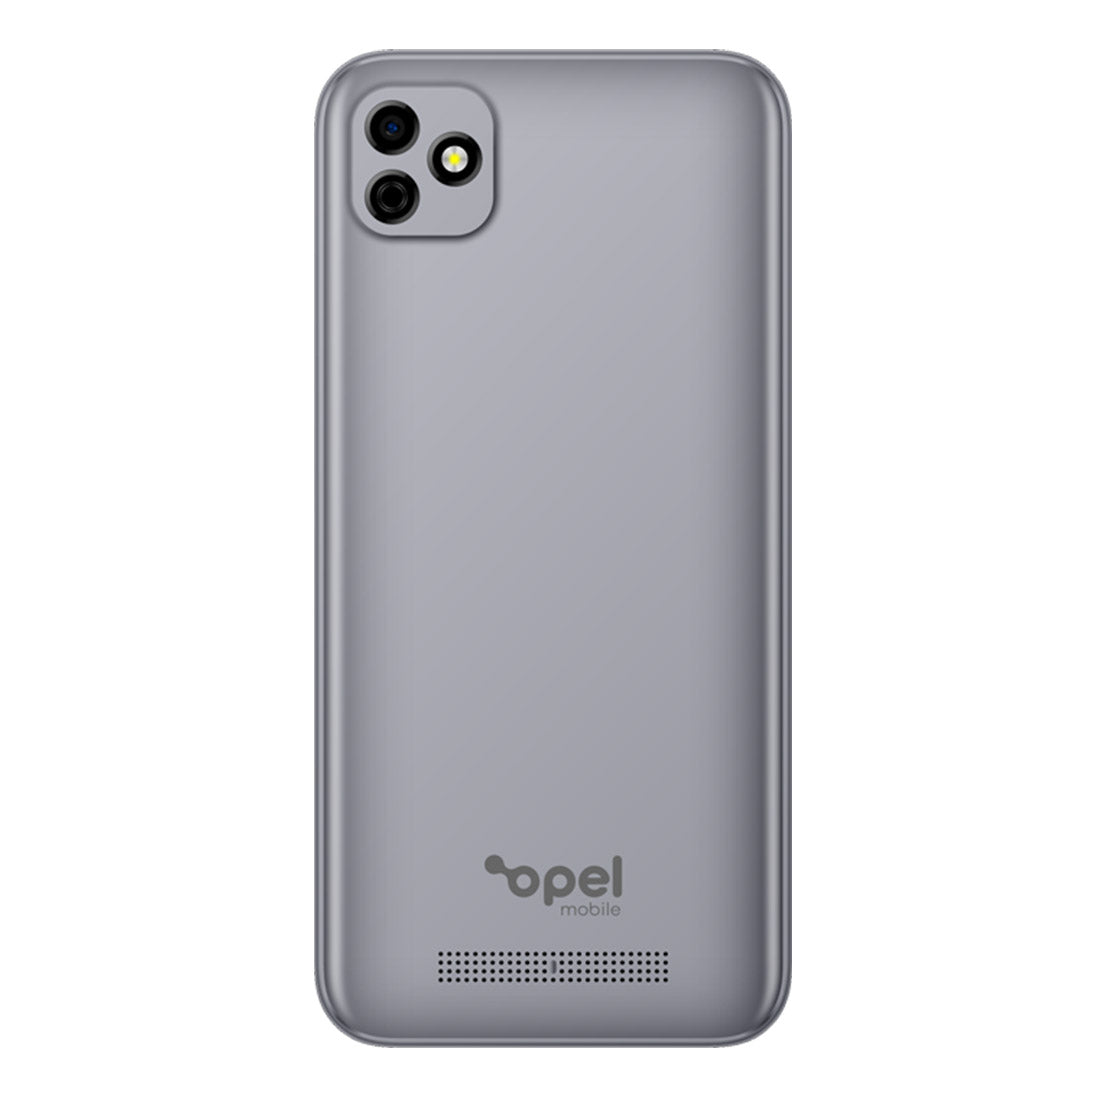 Opel Mobile Smart 55Q Smartphone - Space Grey